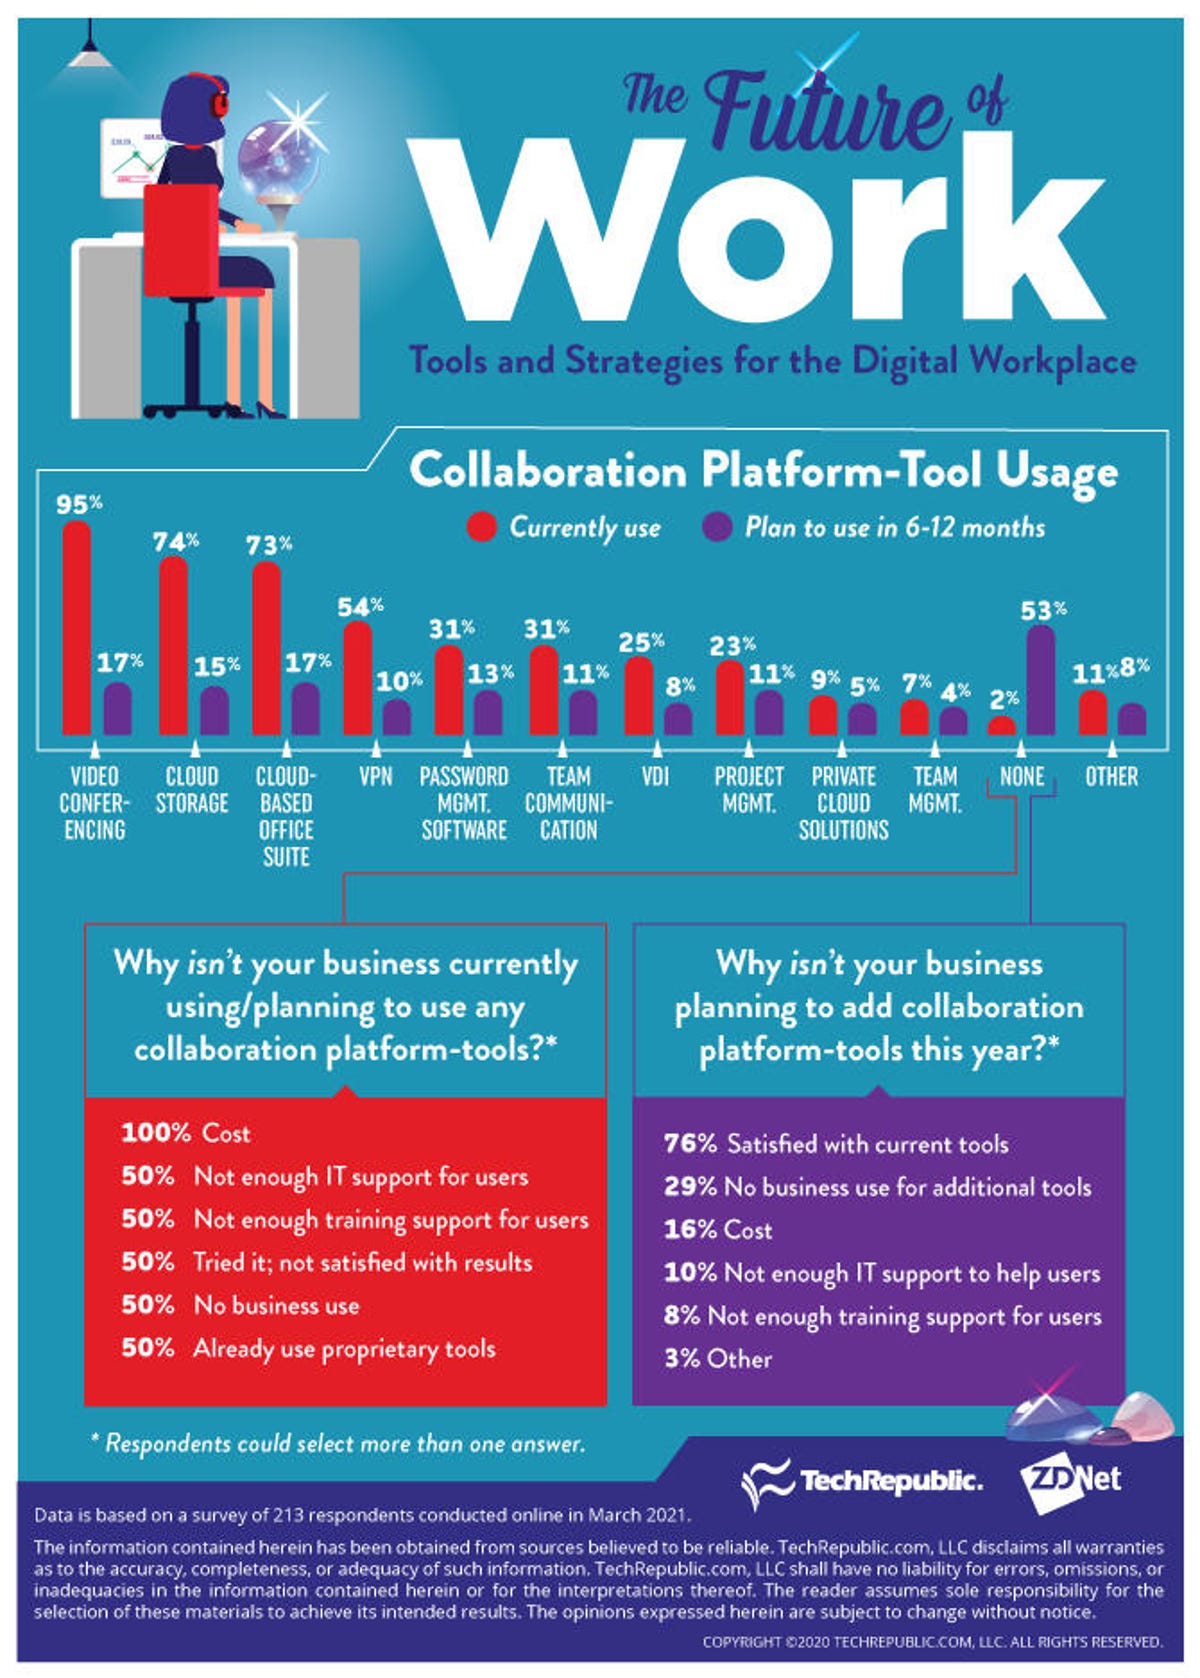 digitalworkplace-infographic-03172021.jpg